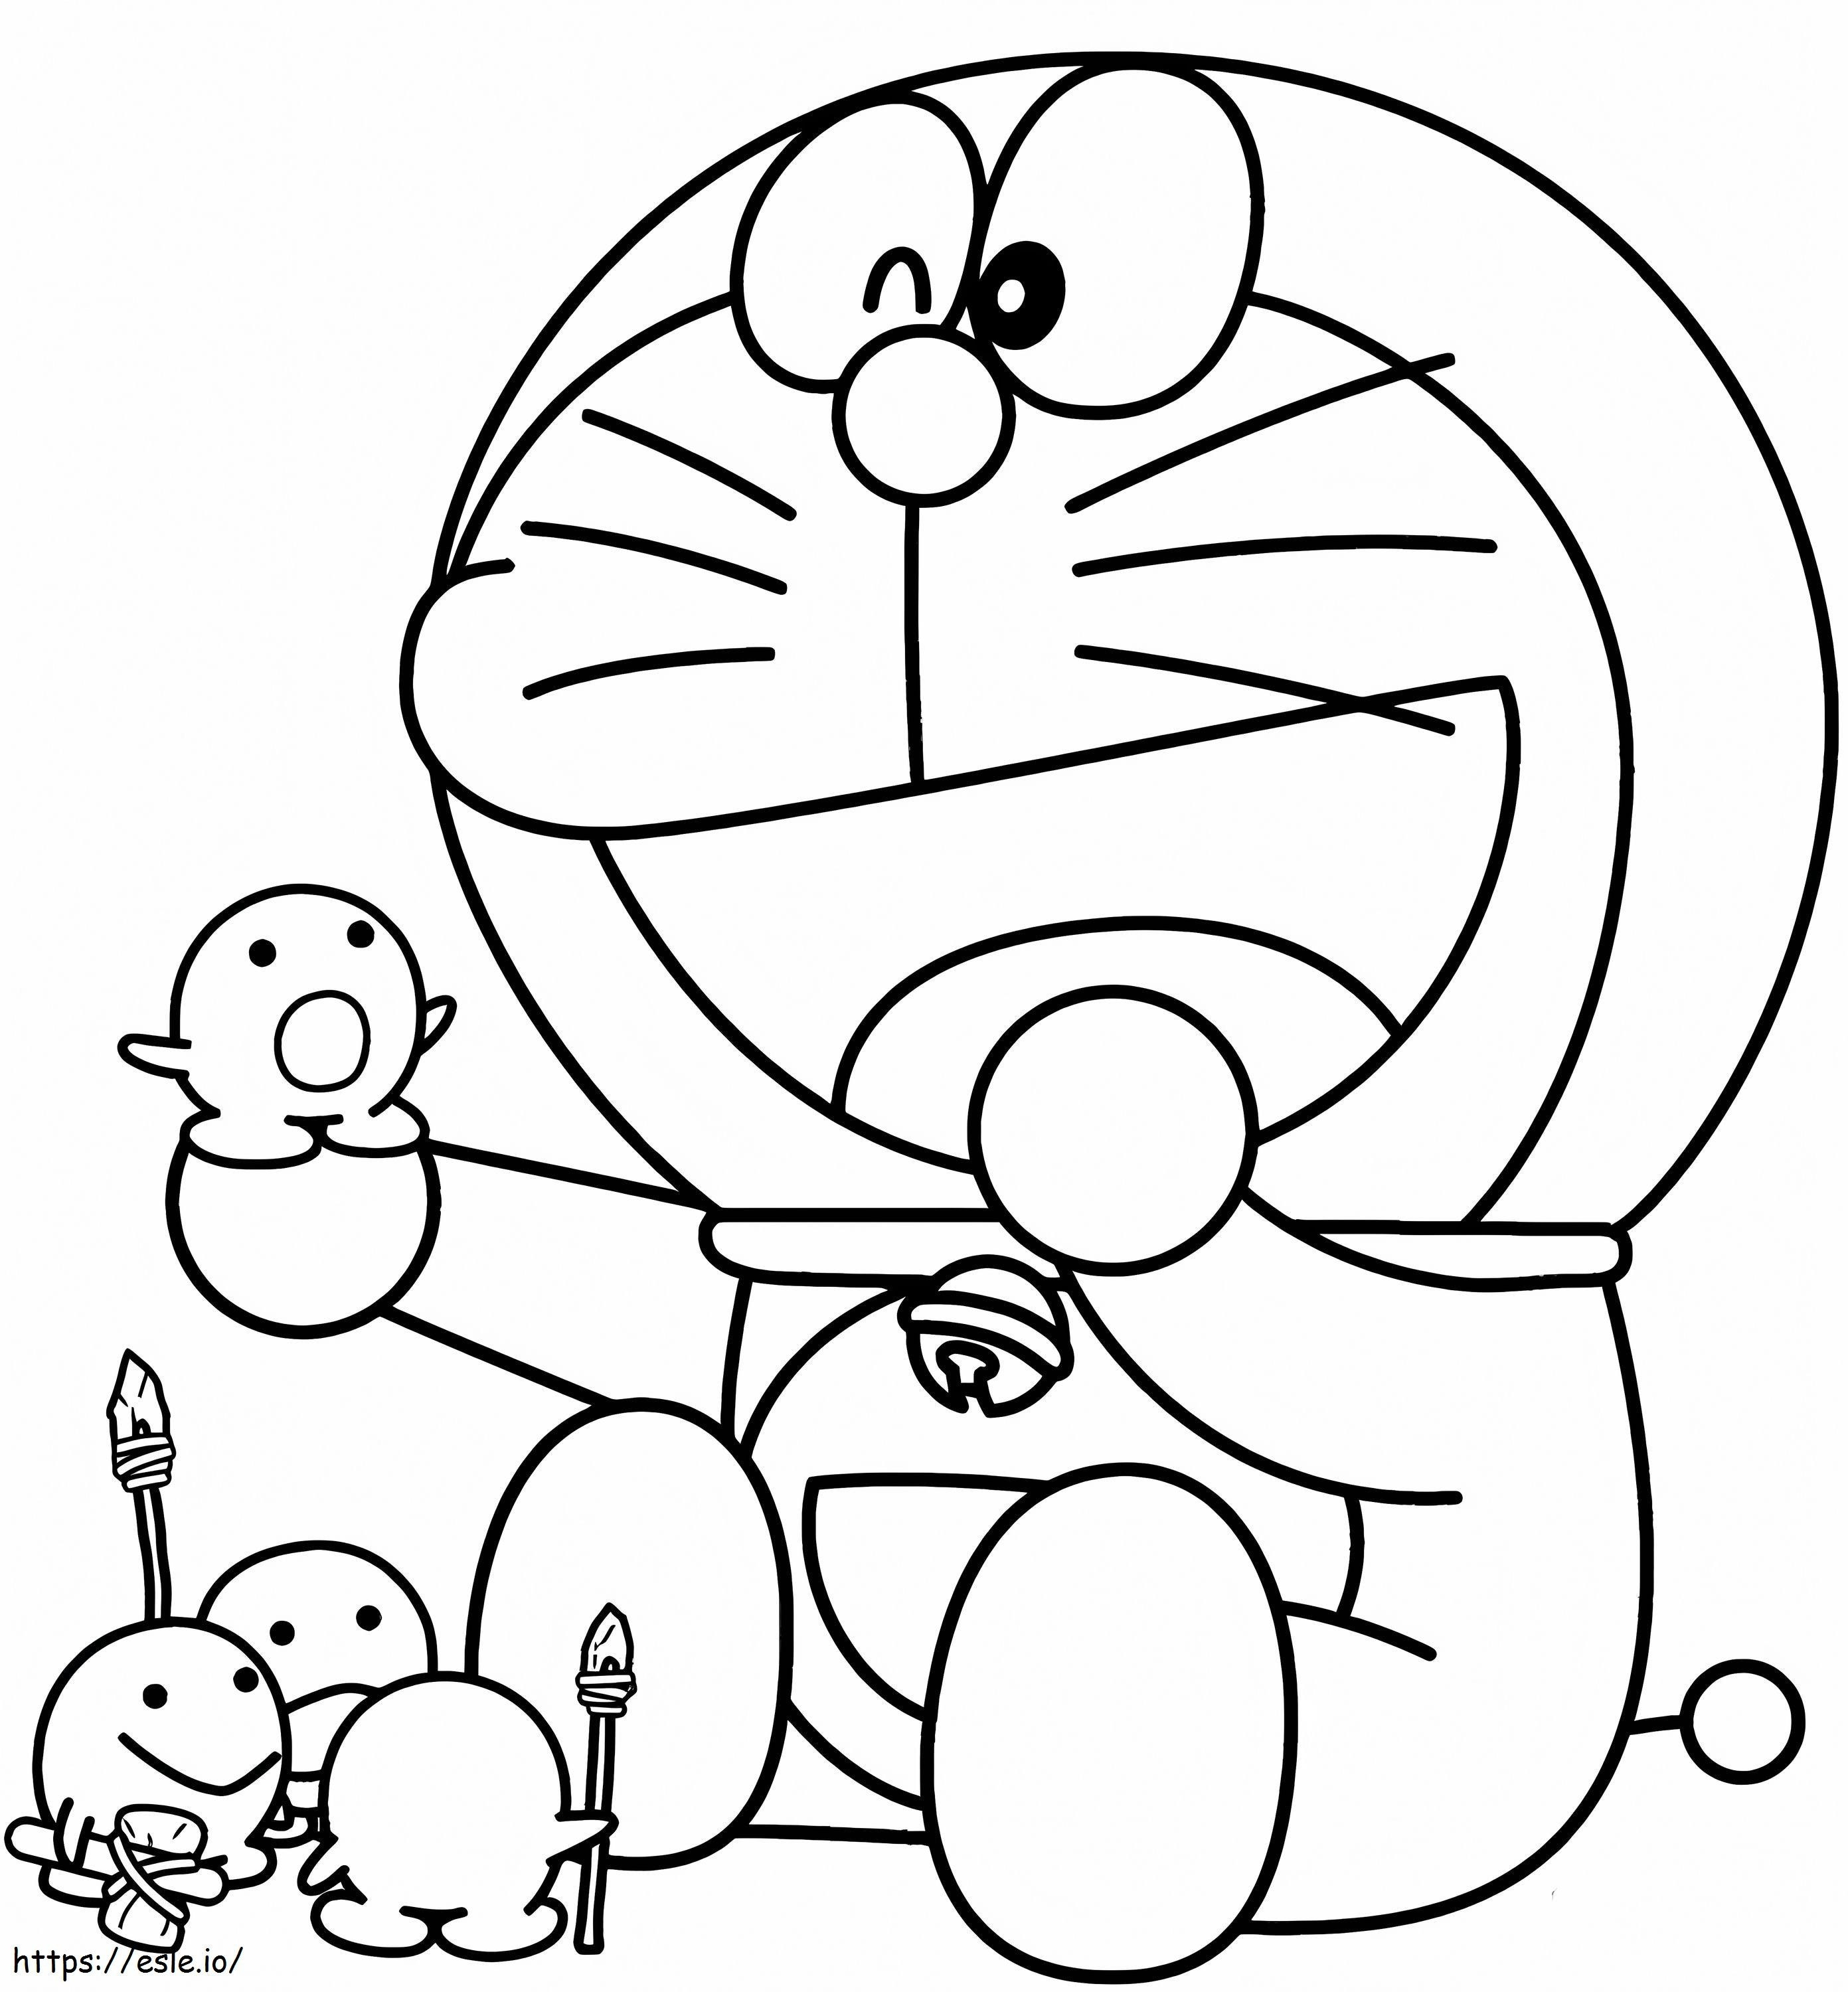 Doraemon i jego zabawki kolorowanka